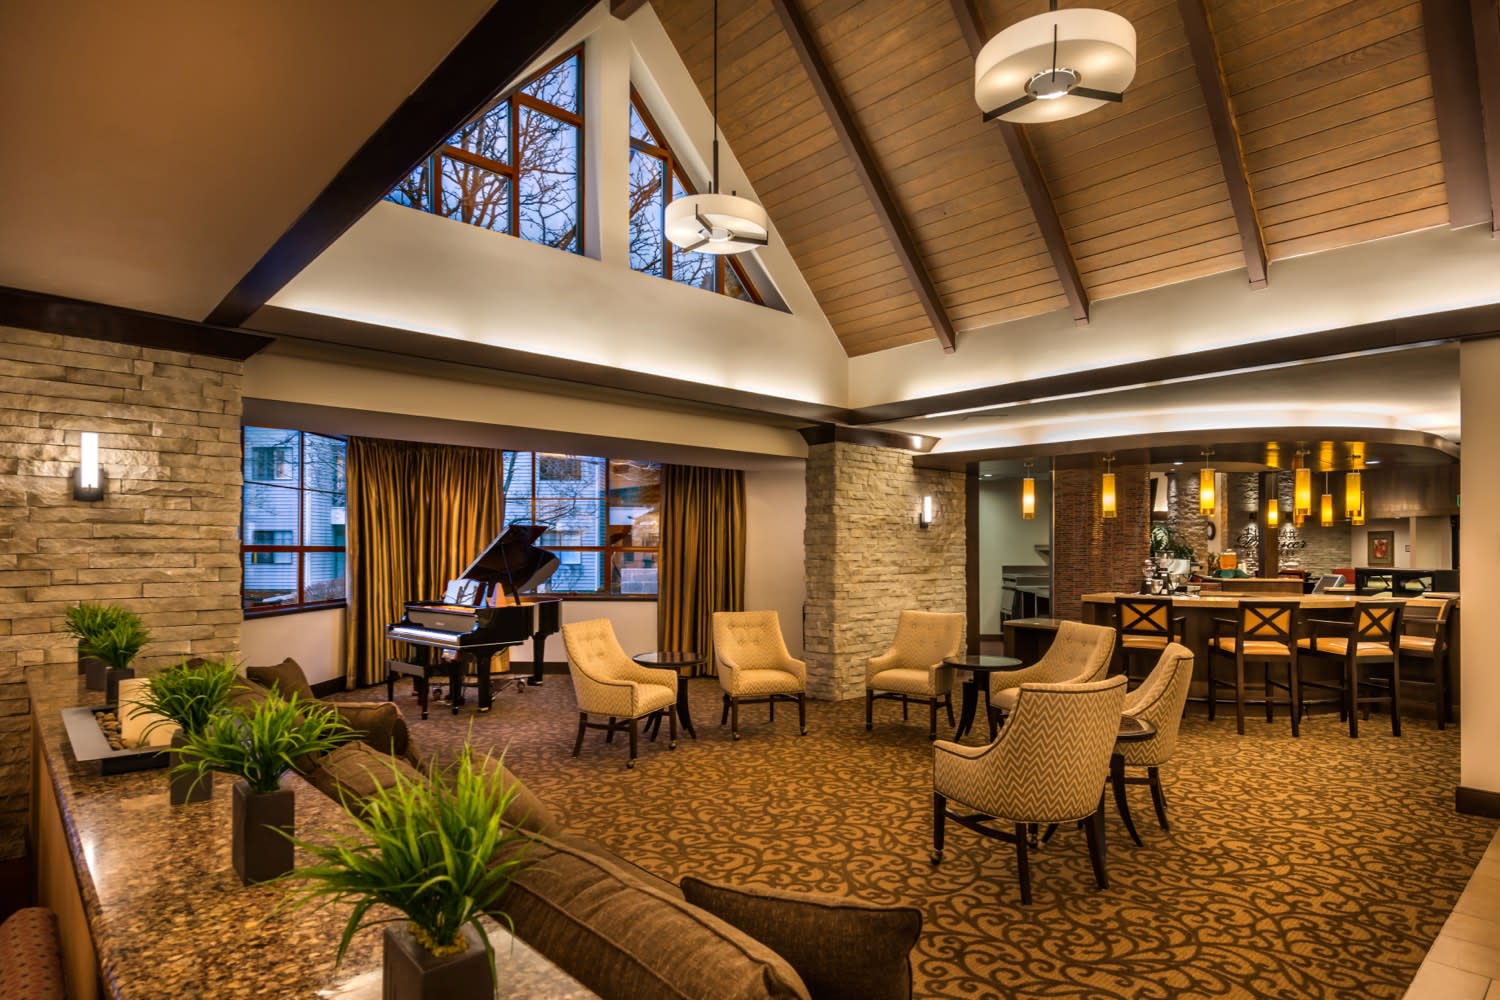 Five Star Premier Residences of Reno indoor common area